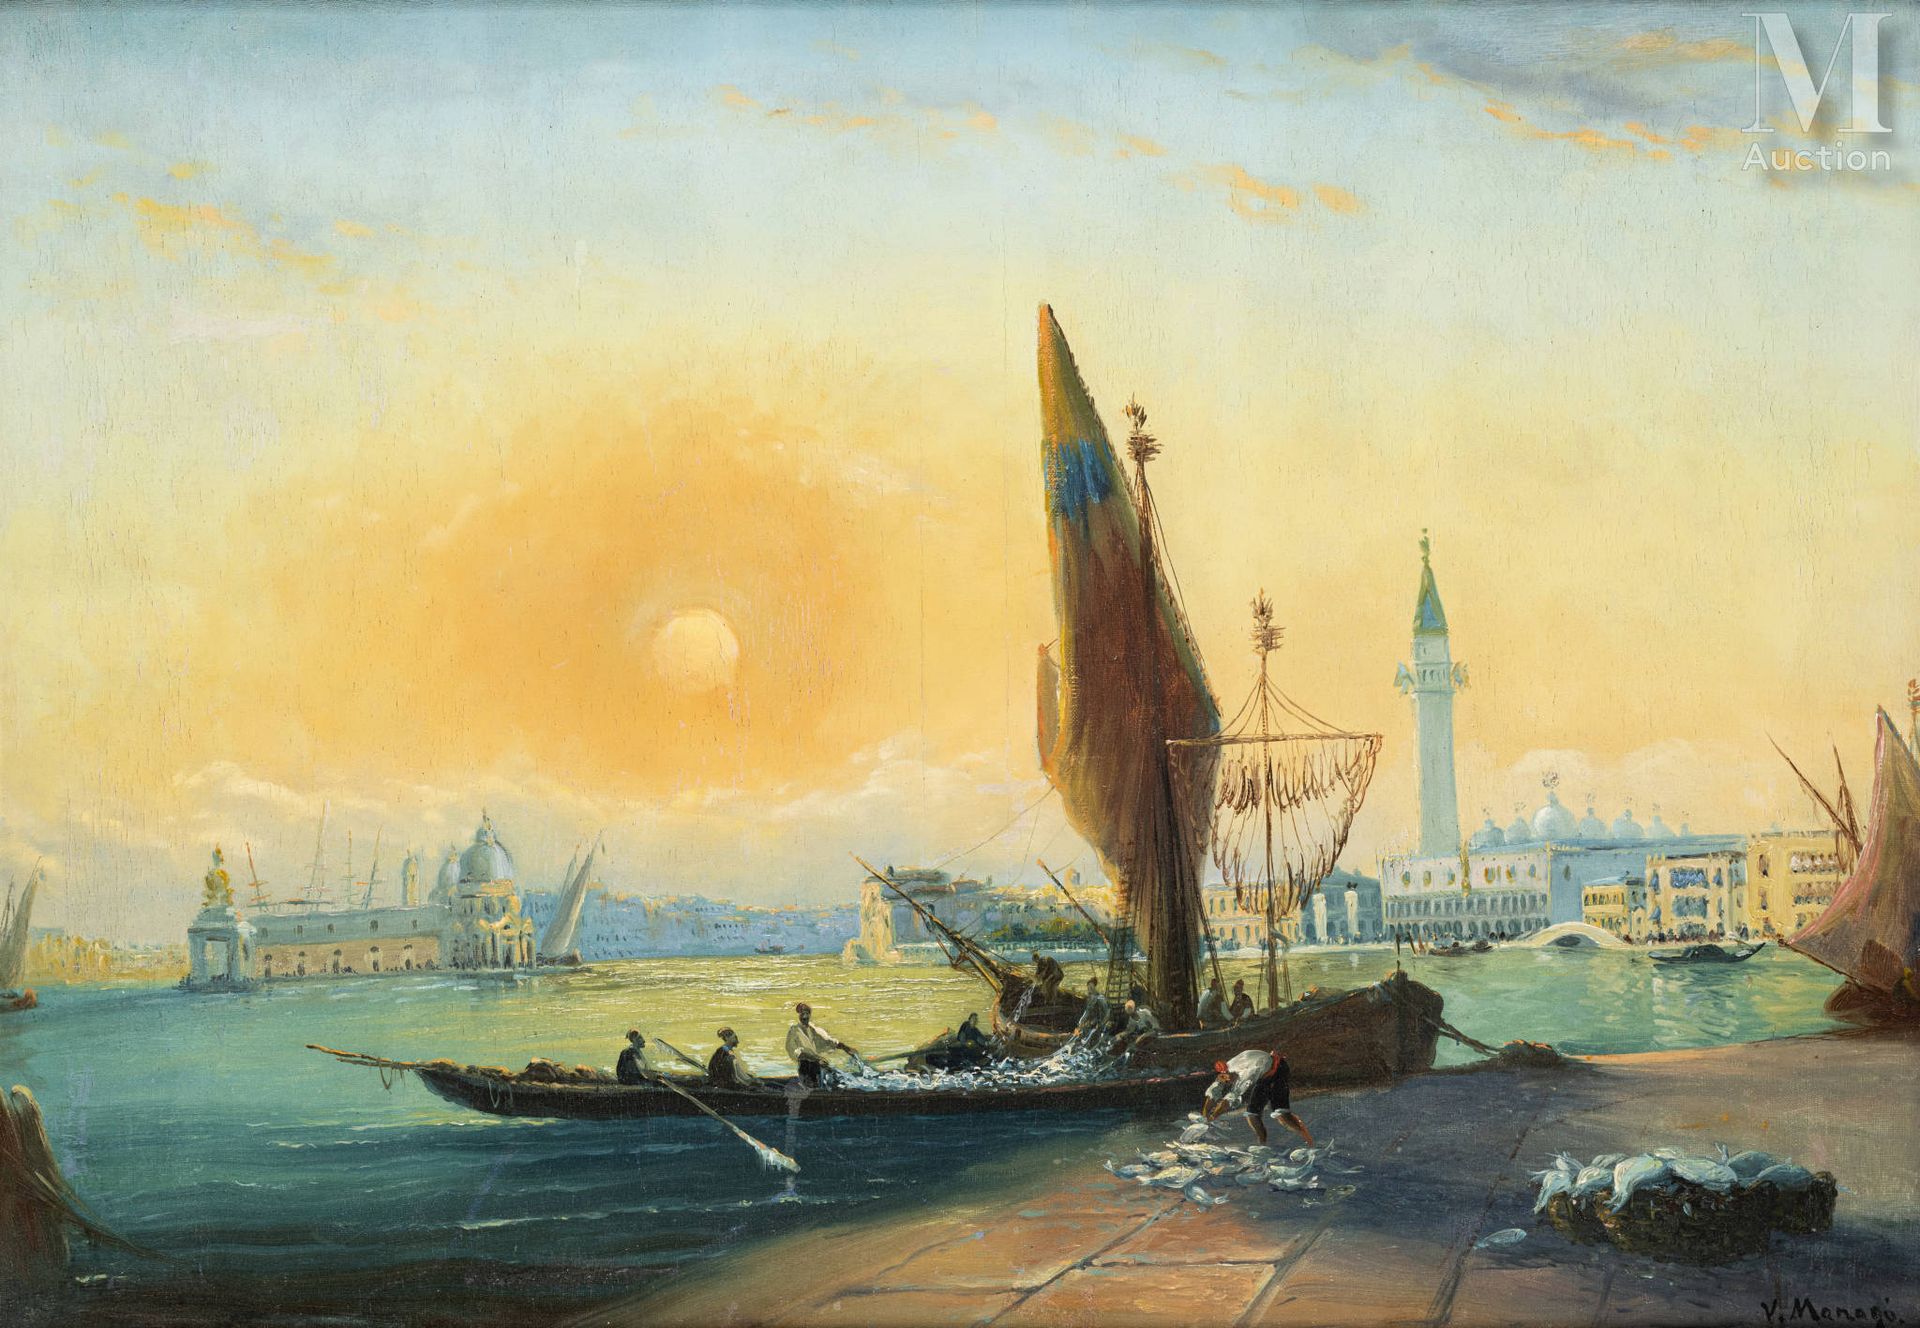 Vincent MANAGO (1880-1936) 威尼斯的渔民

原创布面油画
65 x 92 cm
右下角有签名V.马纳戈 
(修复)